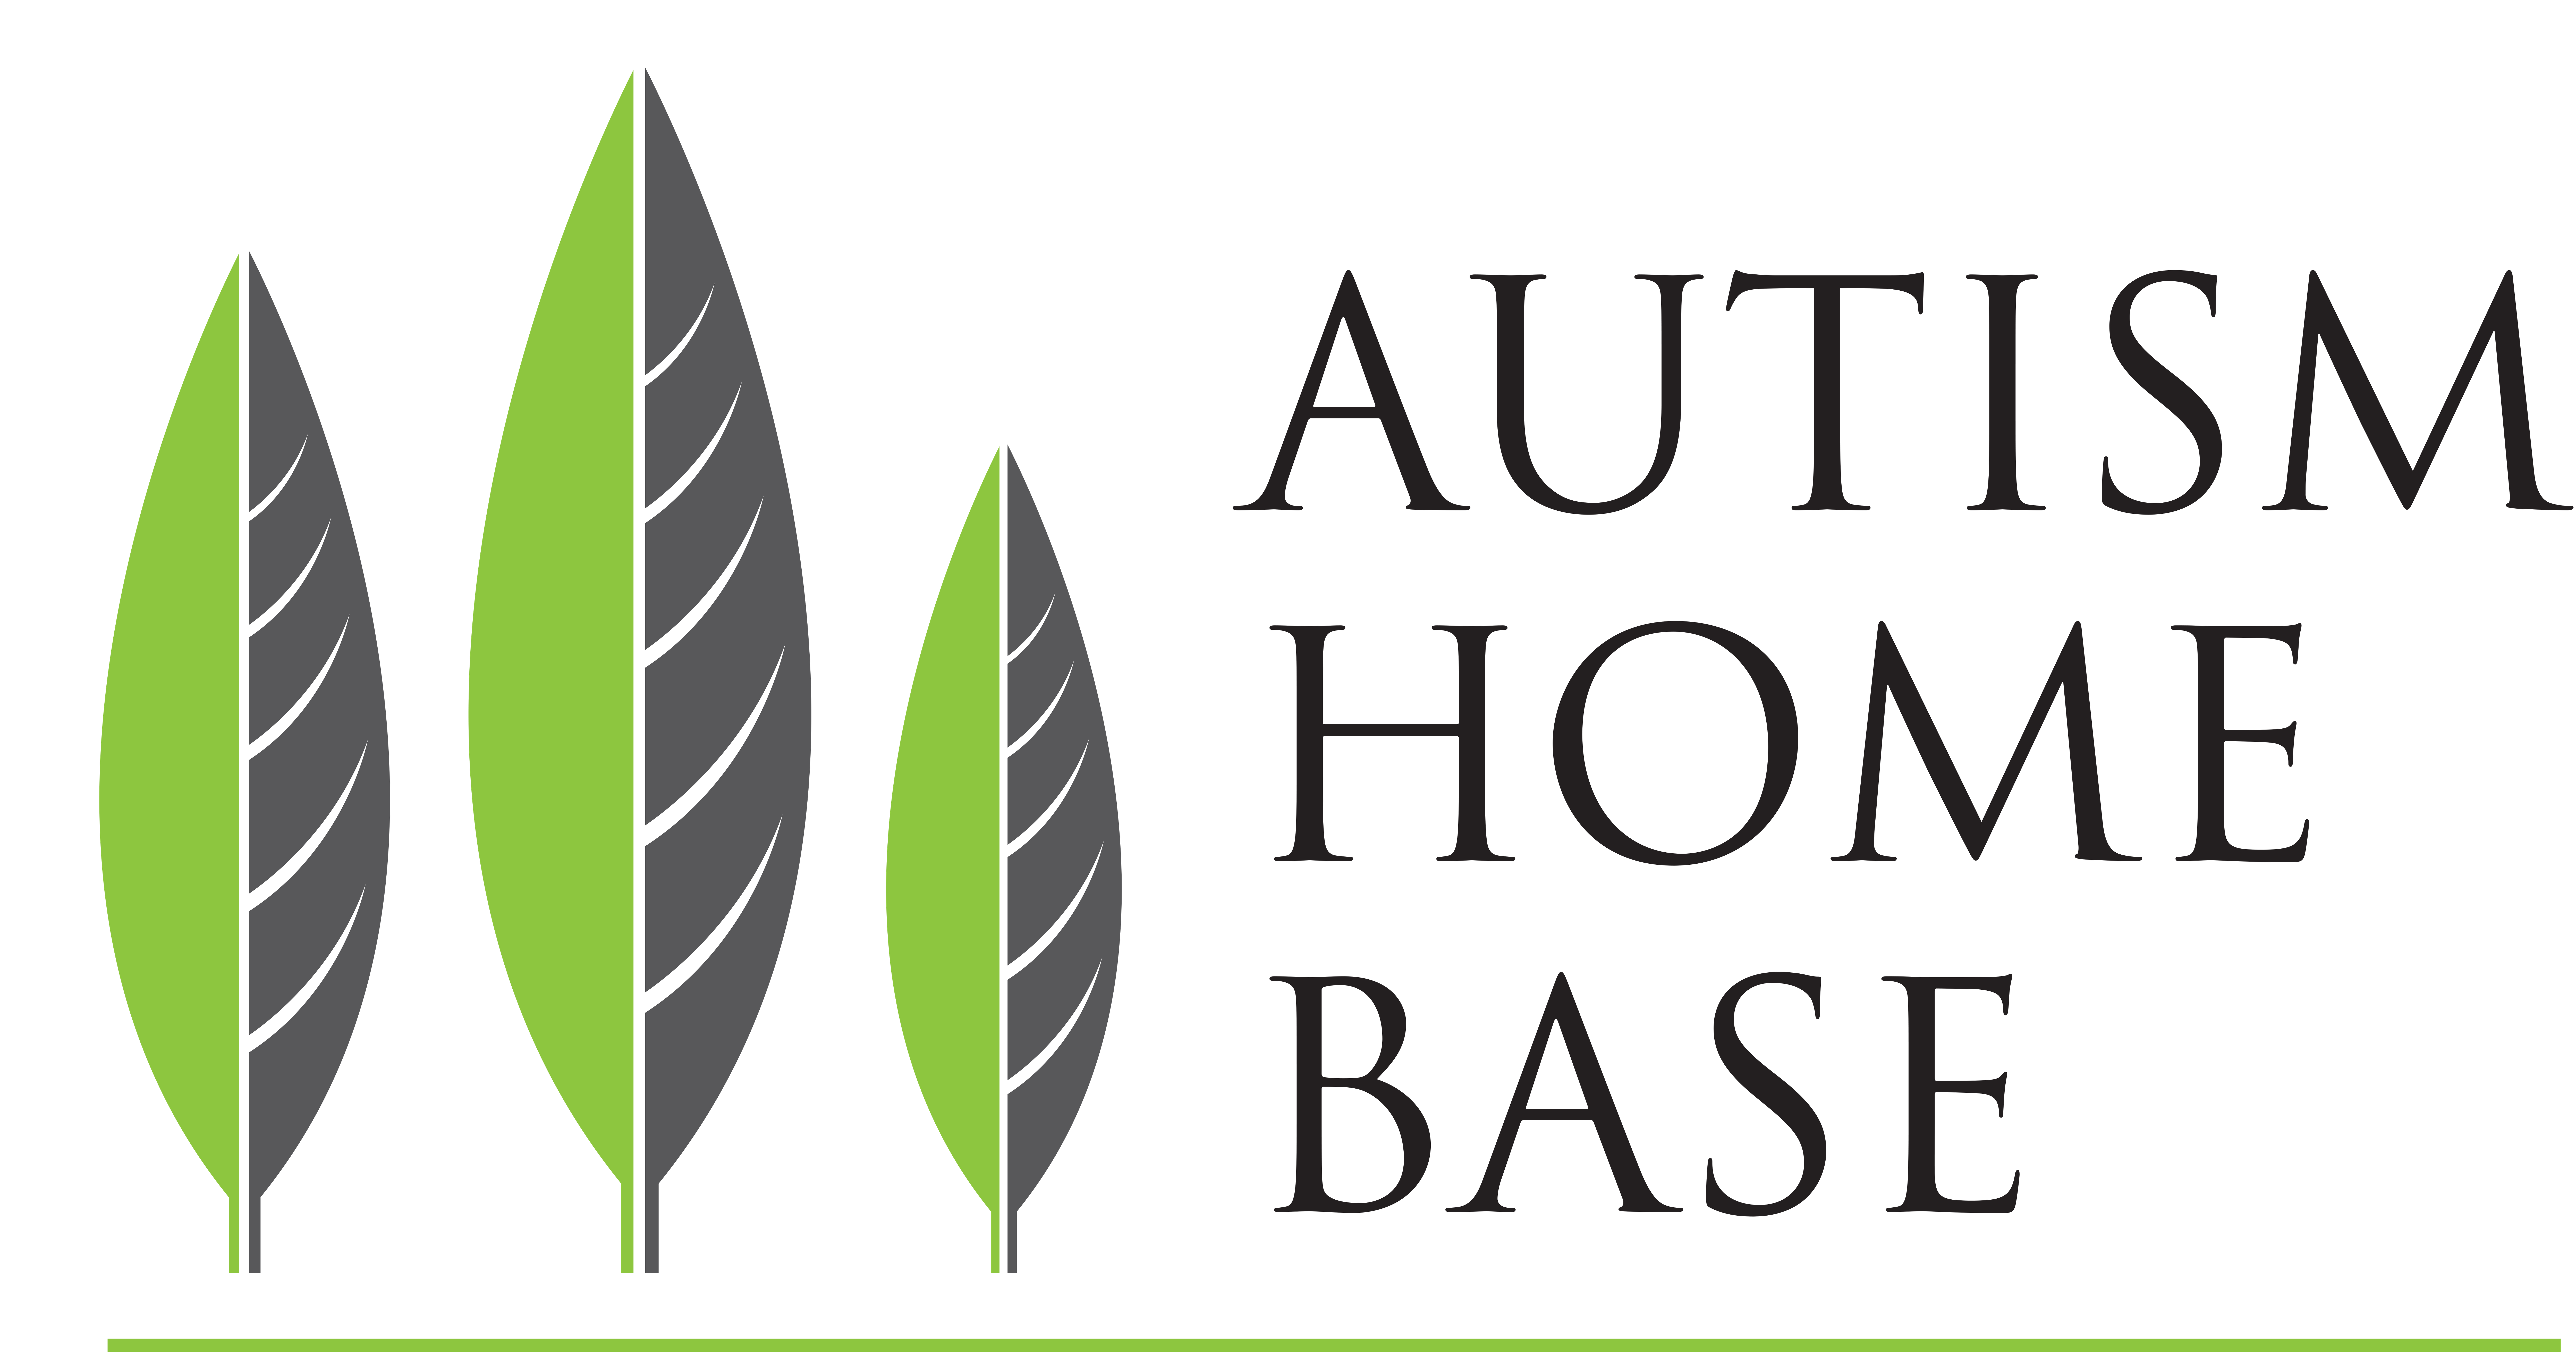 Autism Home Base logo